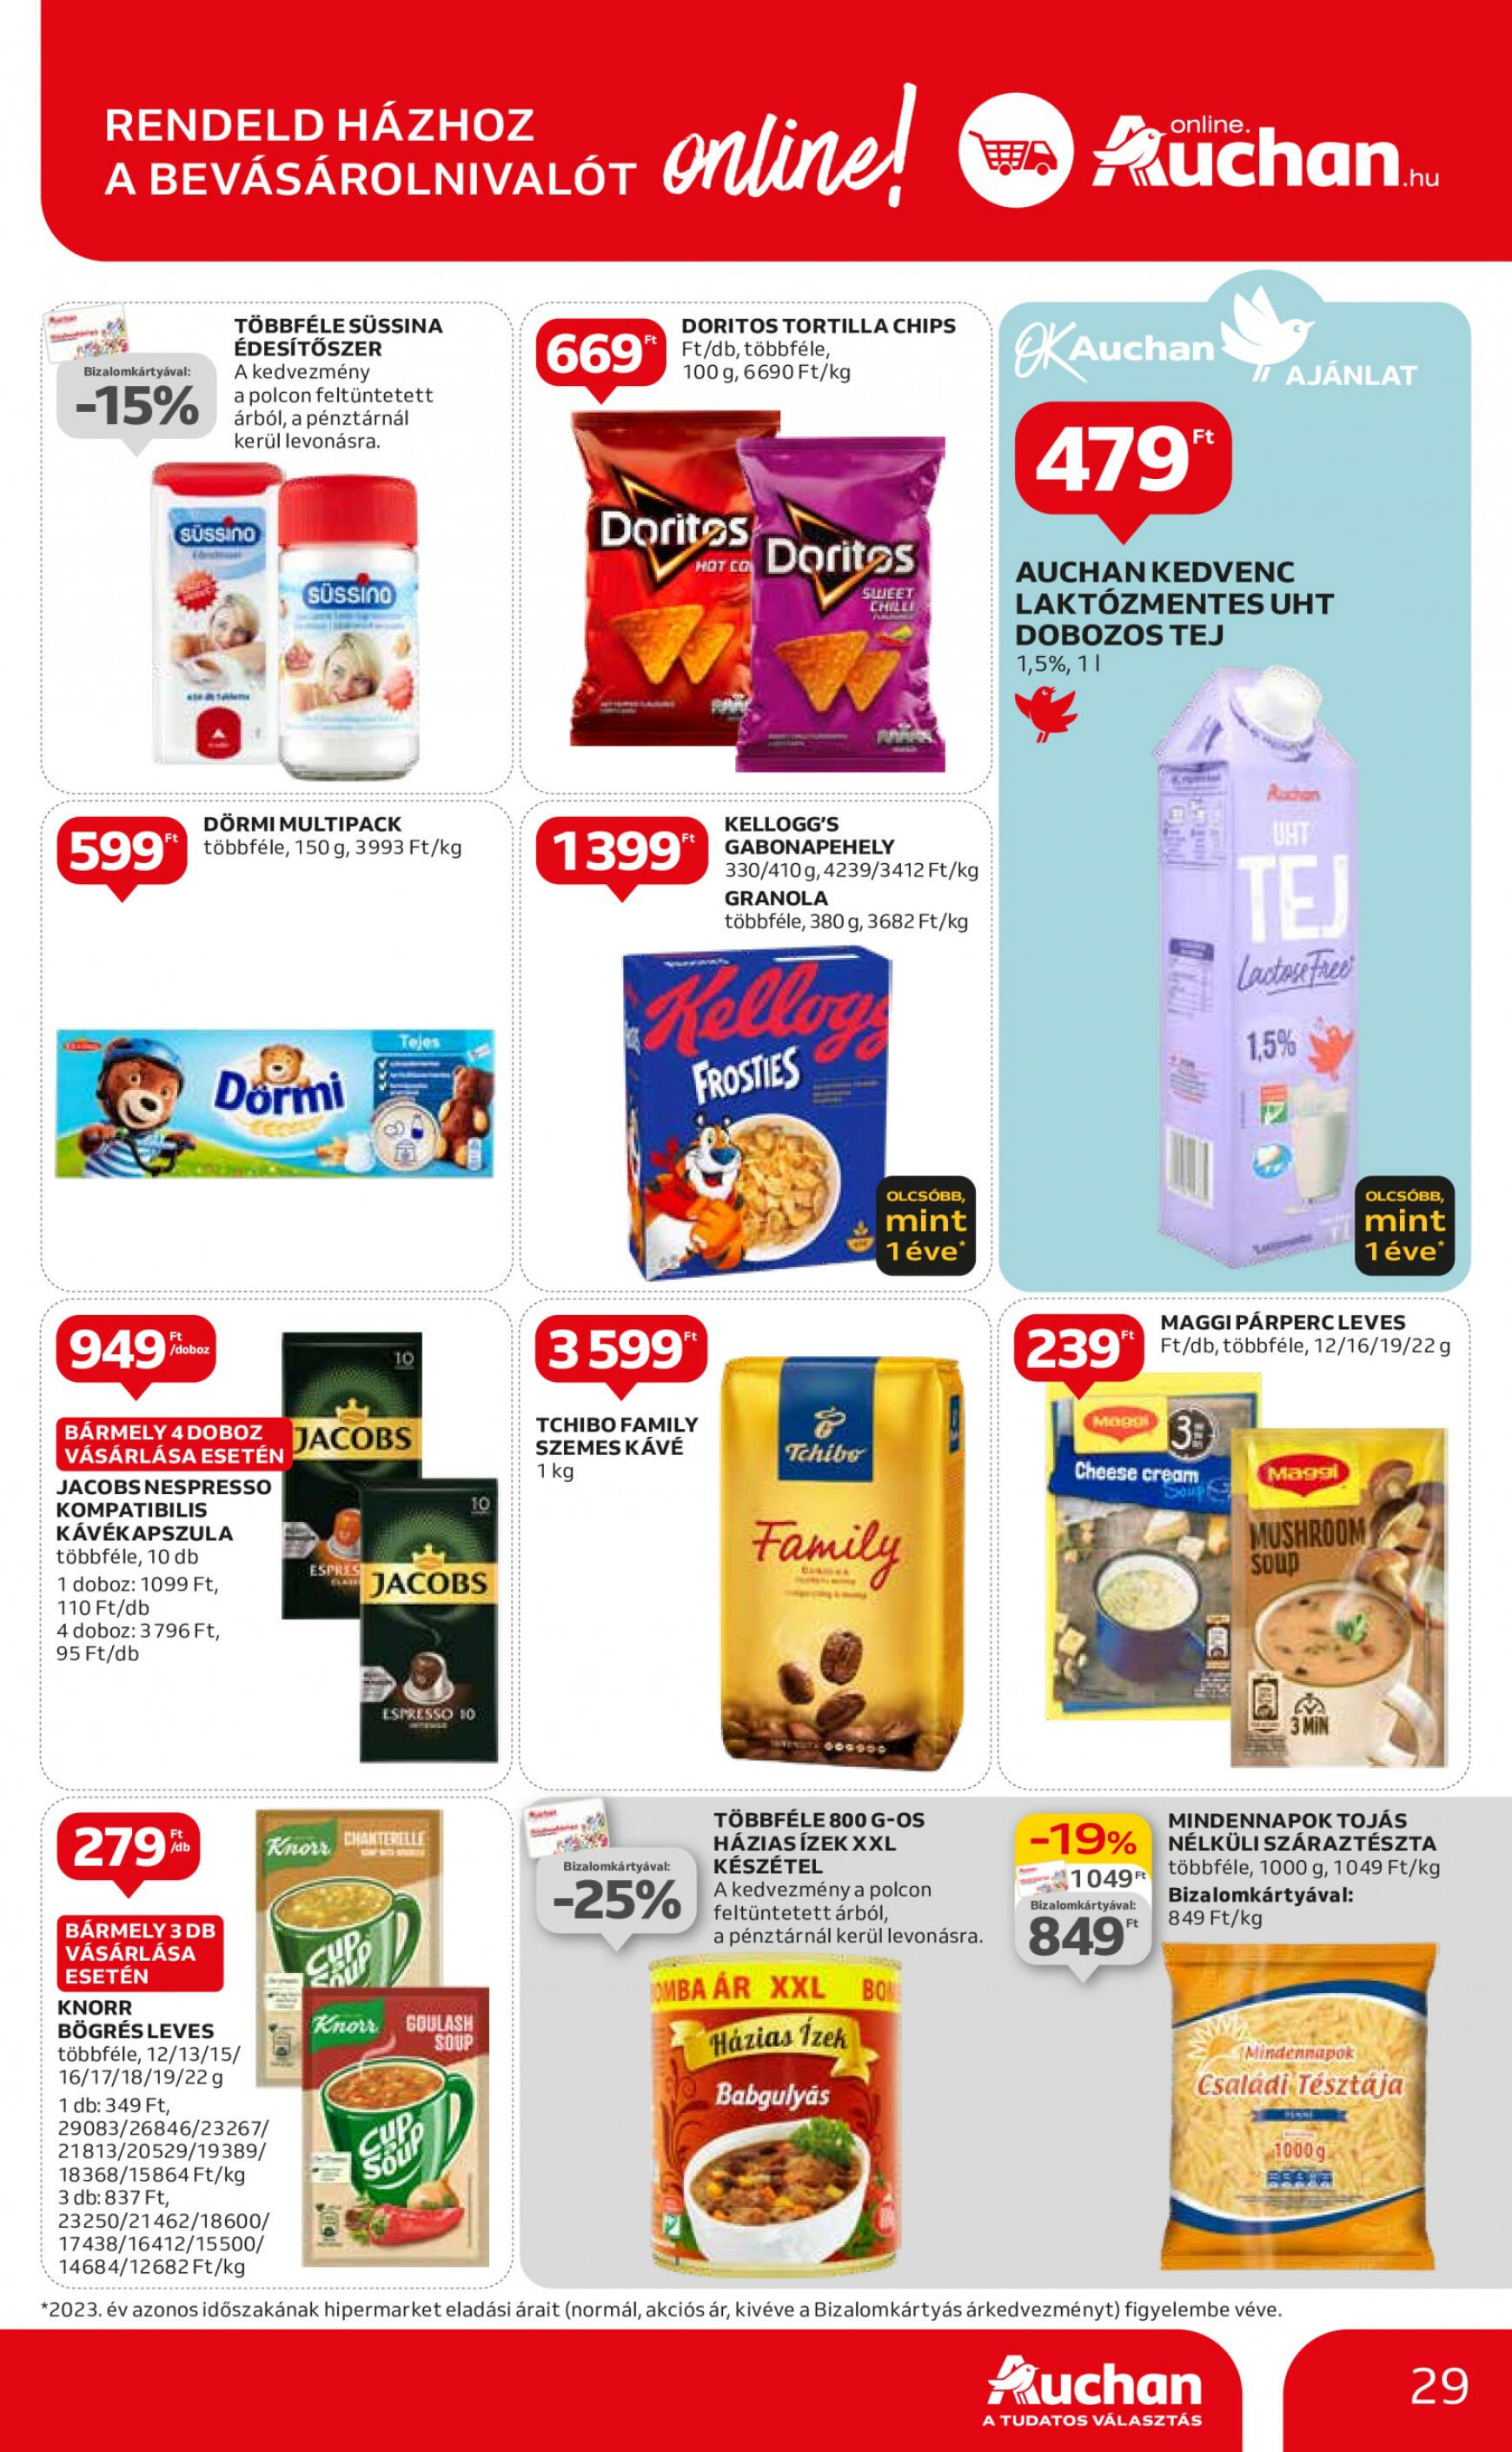 auchan - Aktuális újság Auchan 04.25. - 04.30. - page: 29